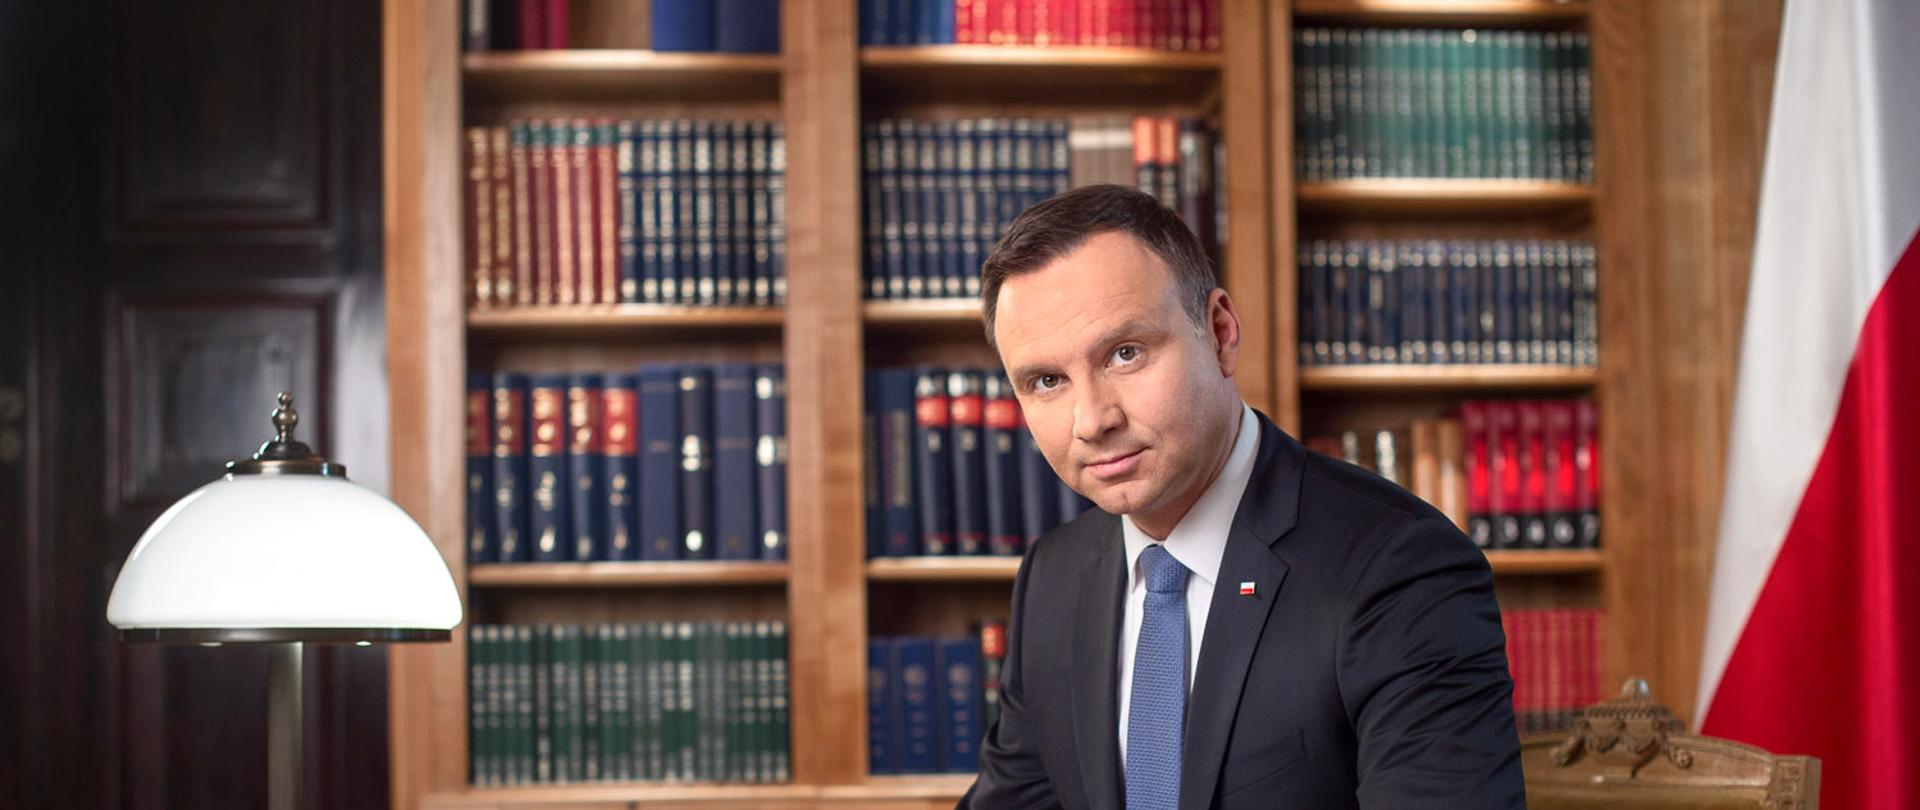 President of the Republic of Poland Andrzej Sebastian Duda